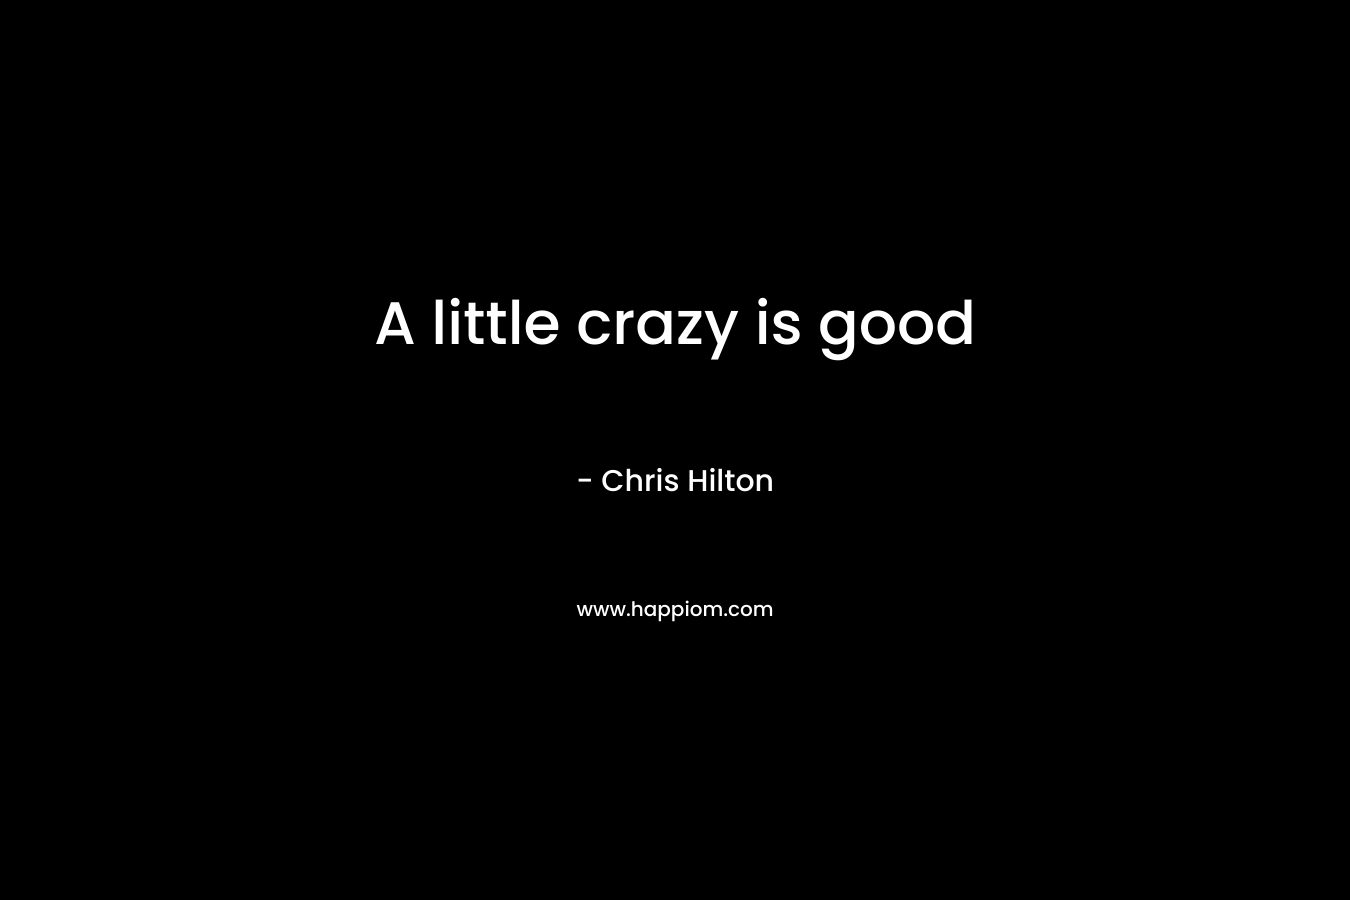 A little crazy is good